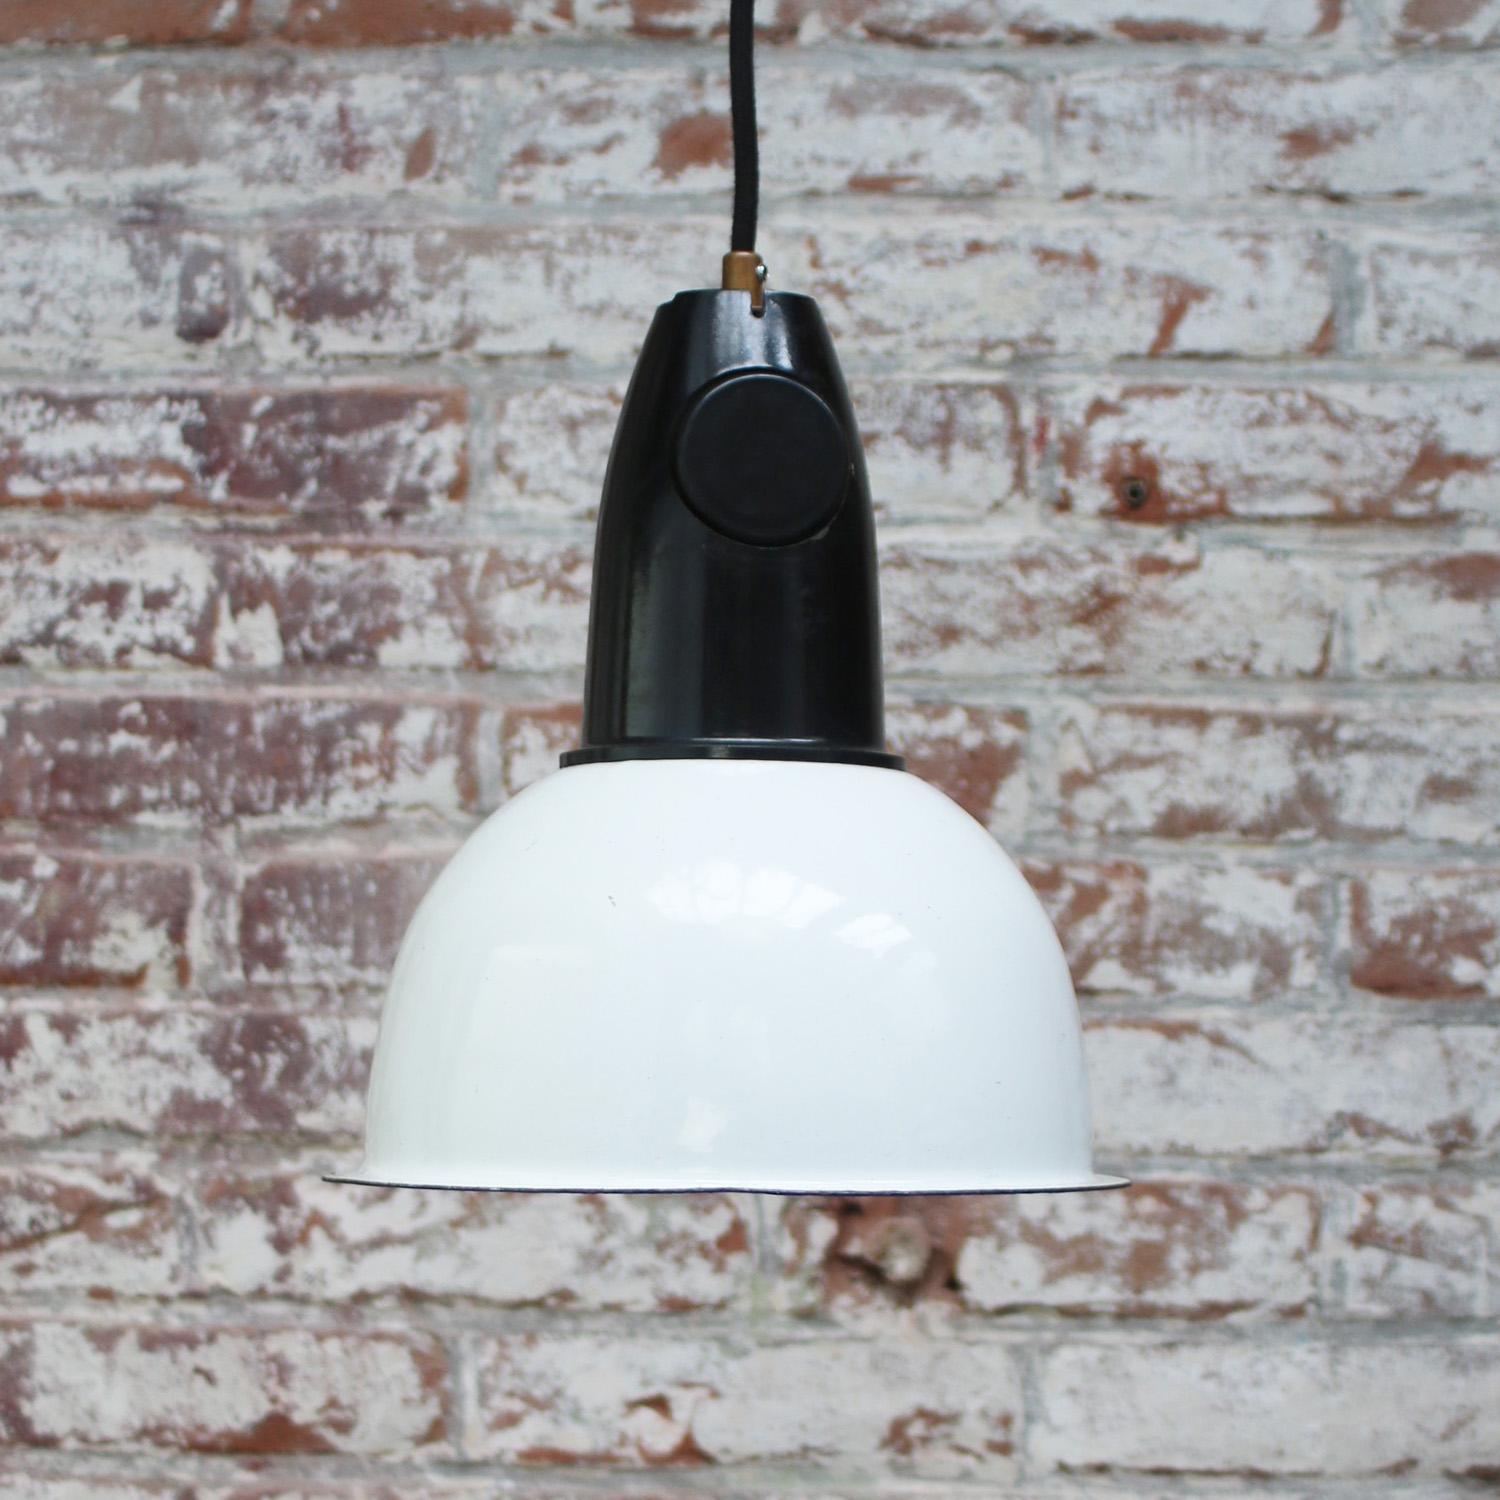 White Enamel Vintage Industrial Bakelite Top Pendant Lamp In Good Condition For Sale In Amsterdam, NL